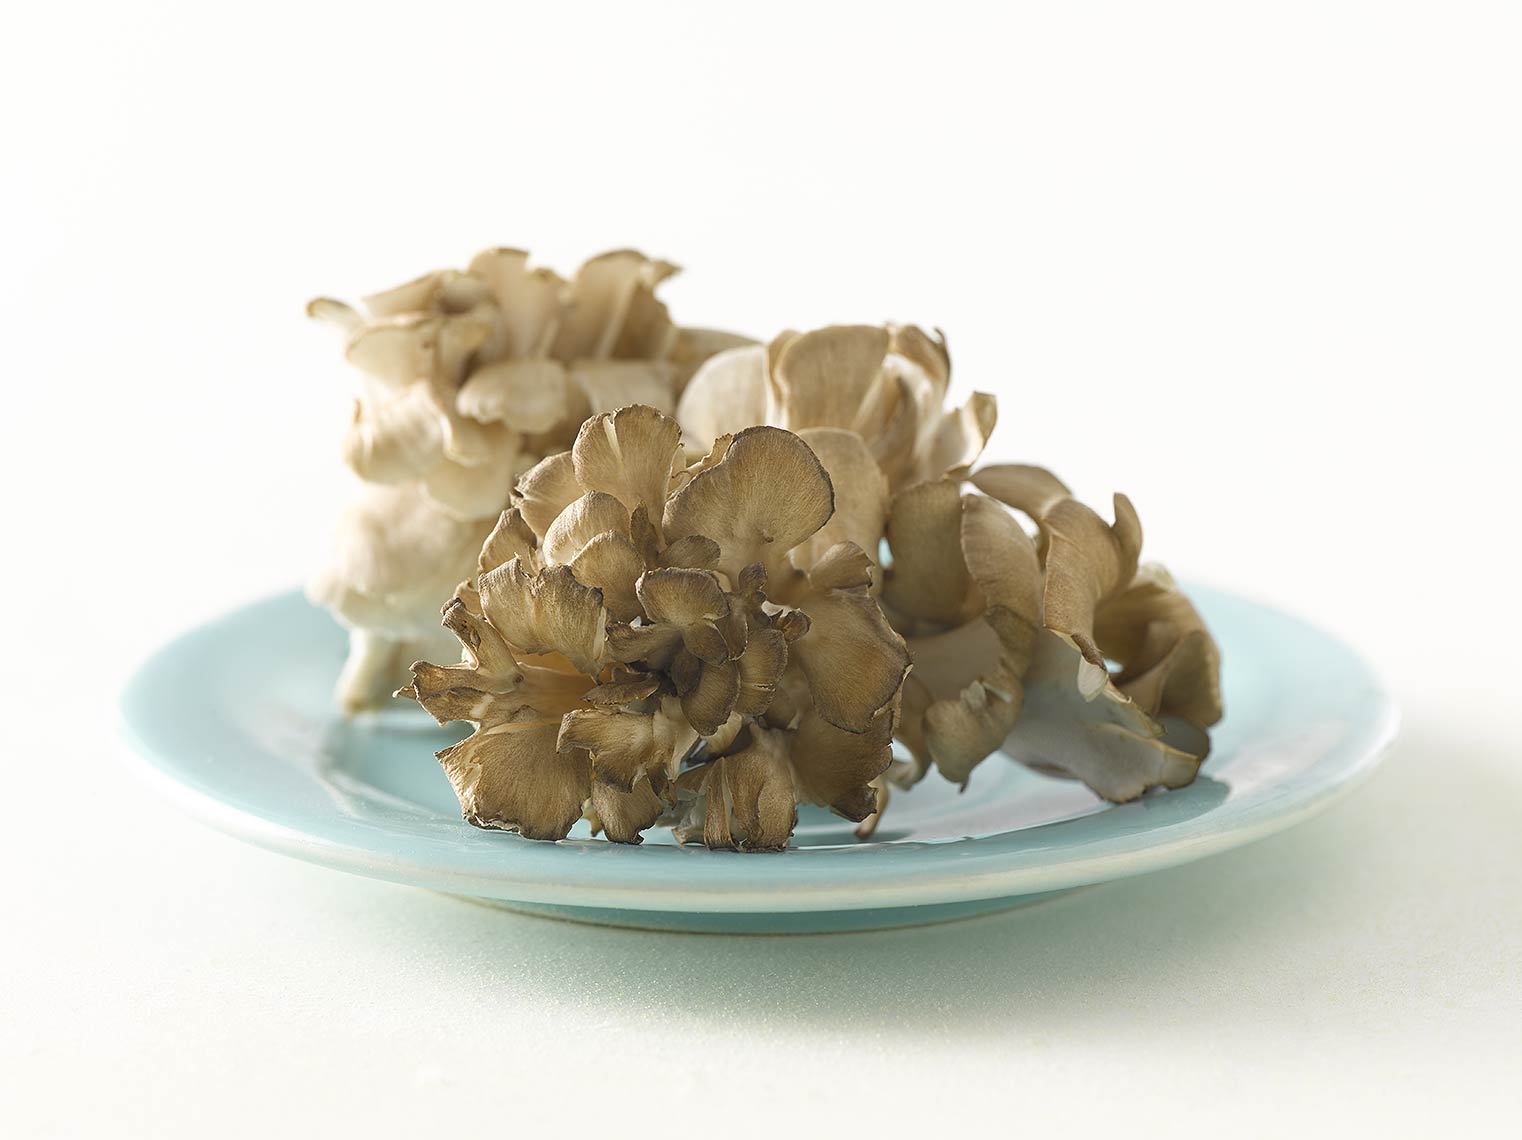 tauras_bublys_mushrooms_plate